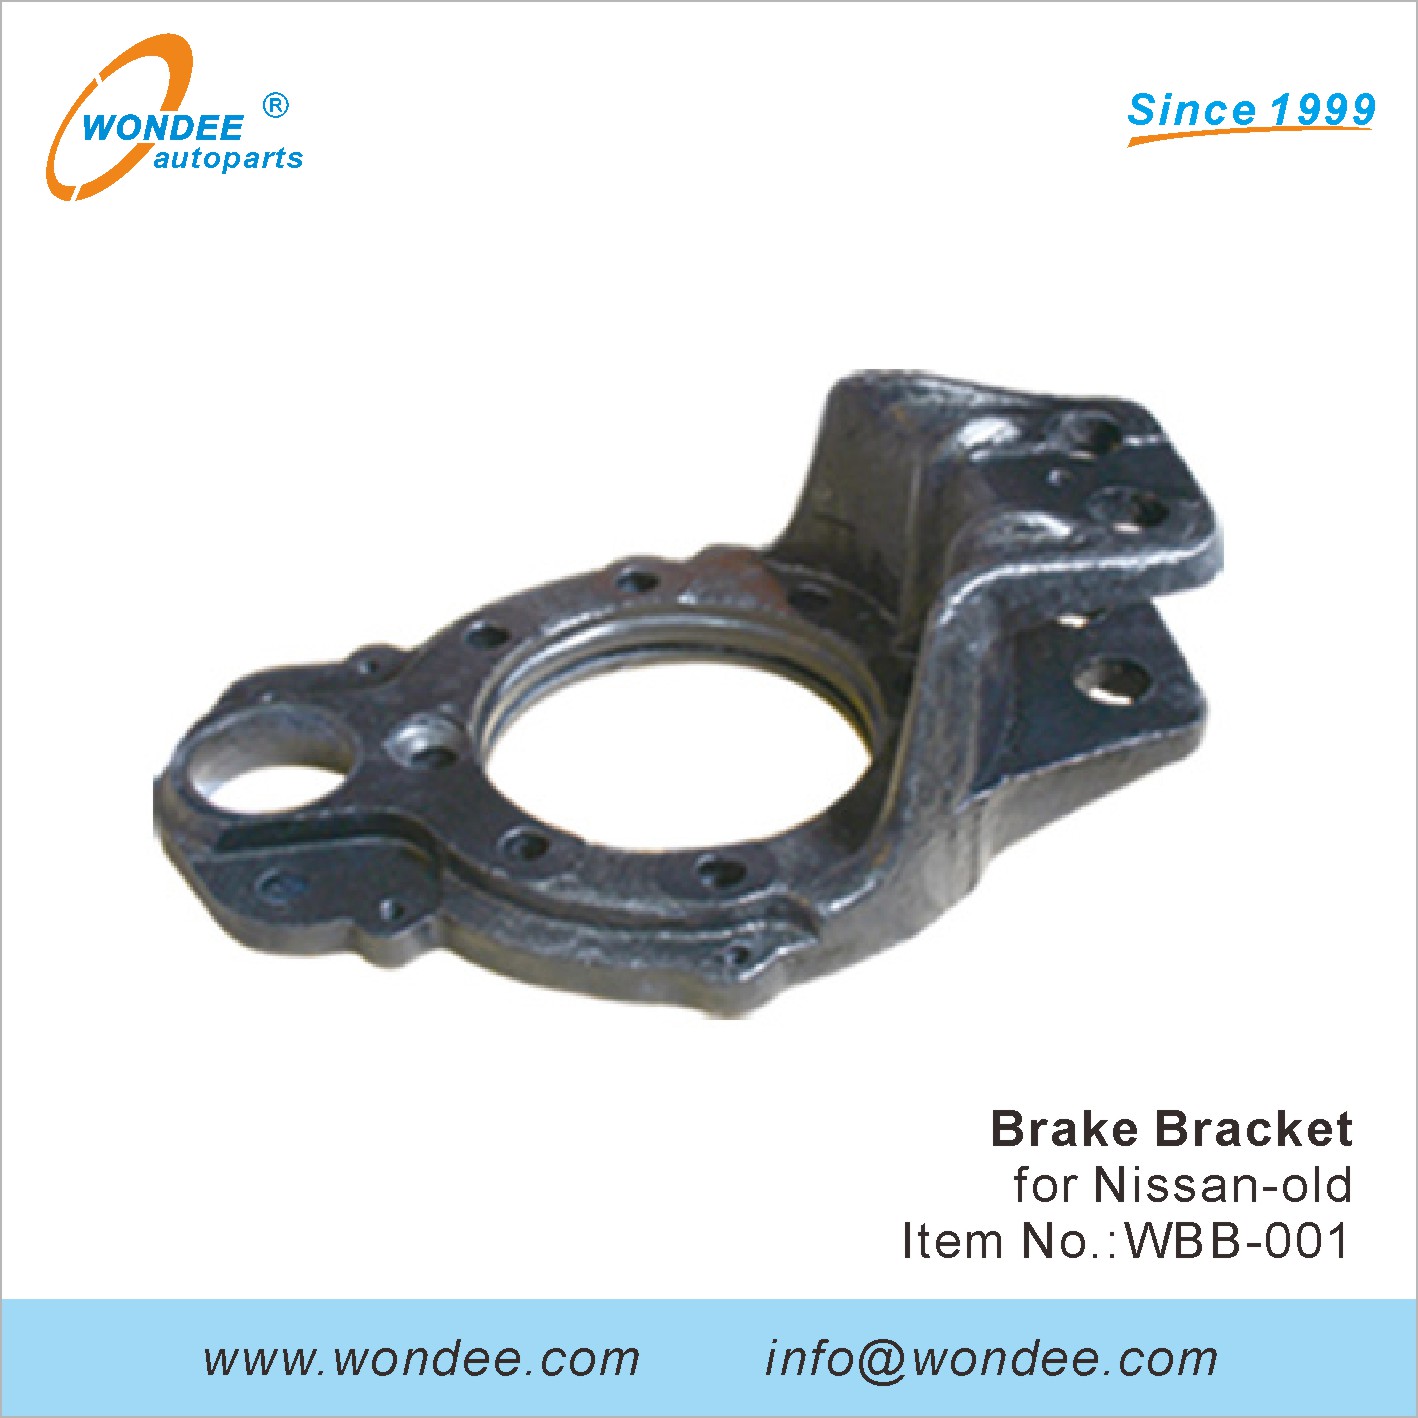 Brake Bracket and Spare Tire Carrier for Trucks